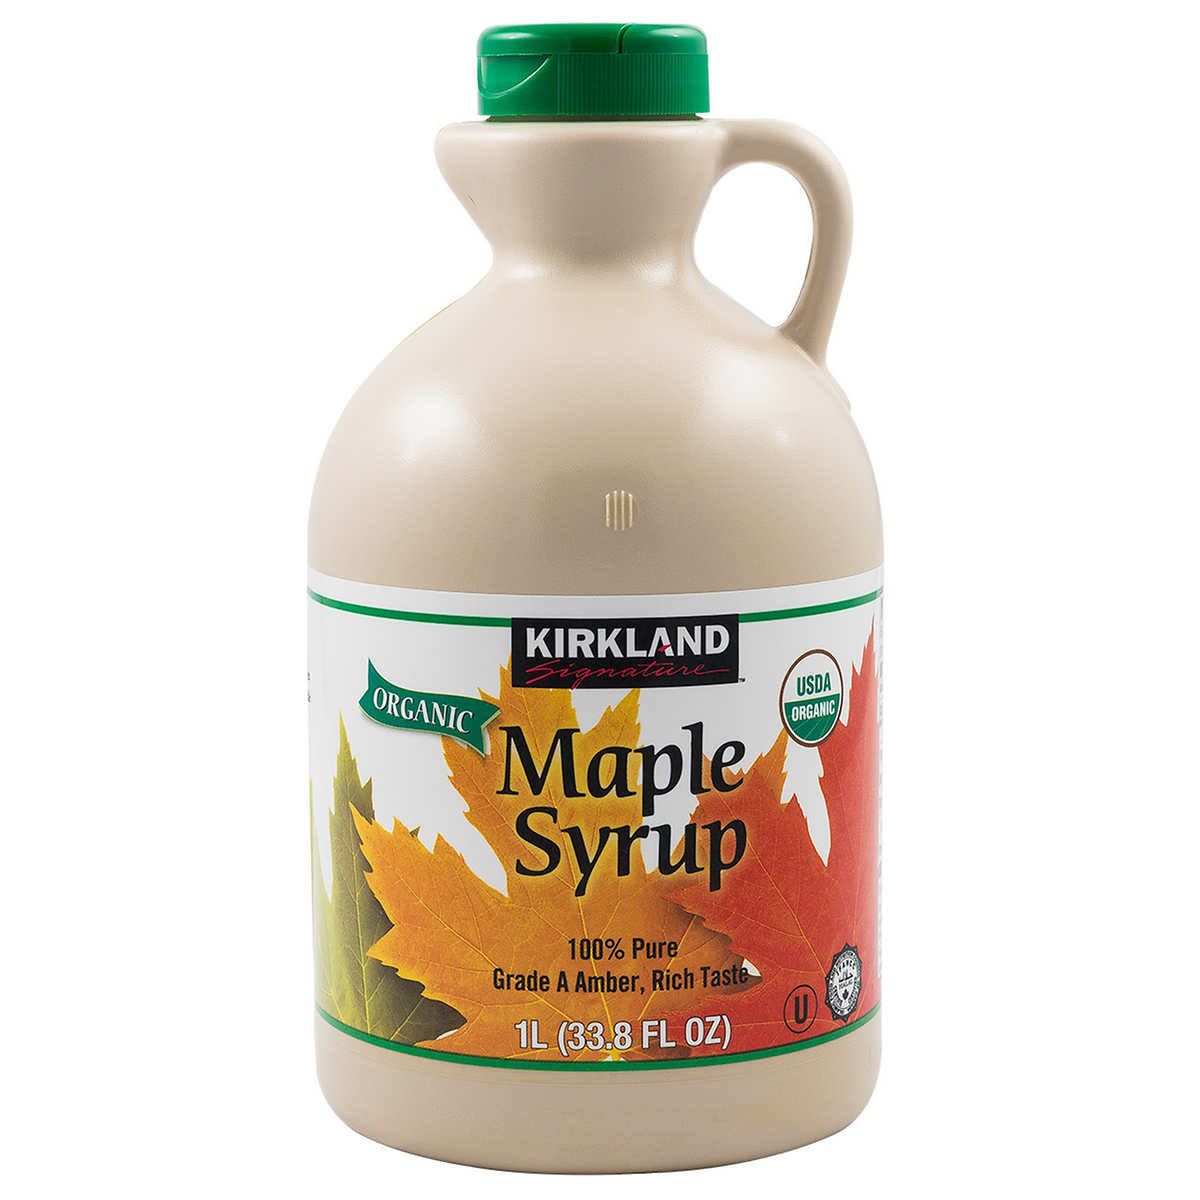 Kirkland maple syrup